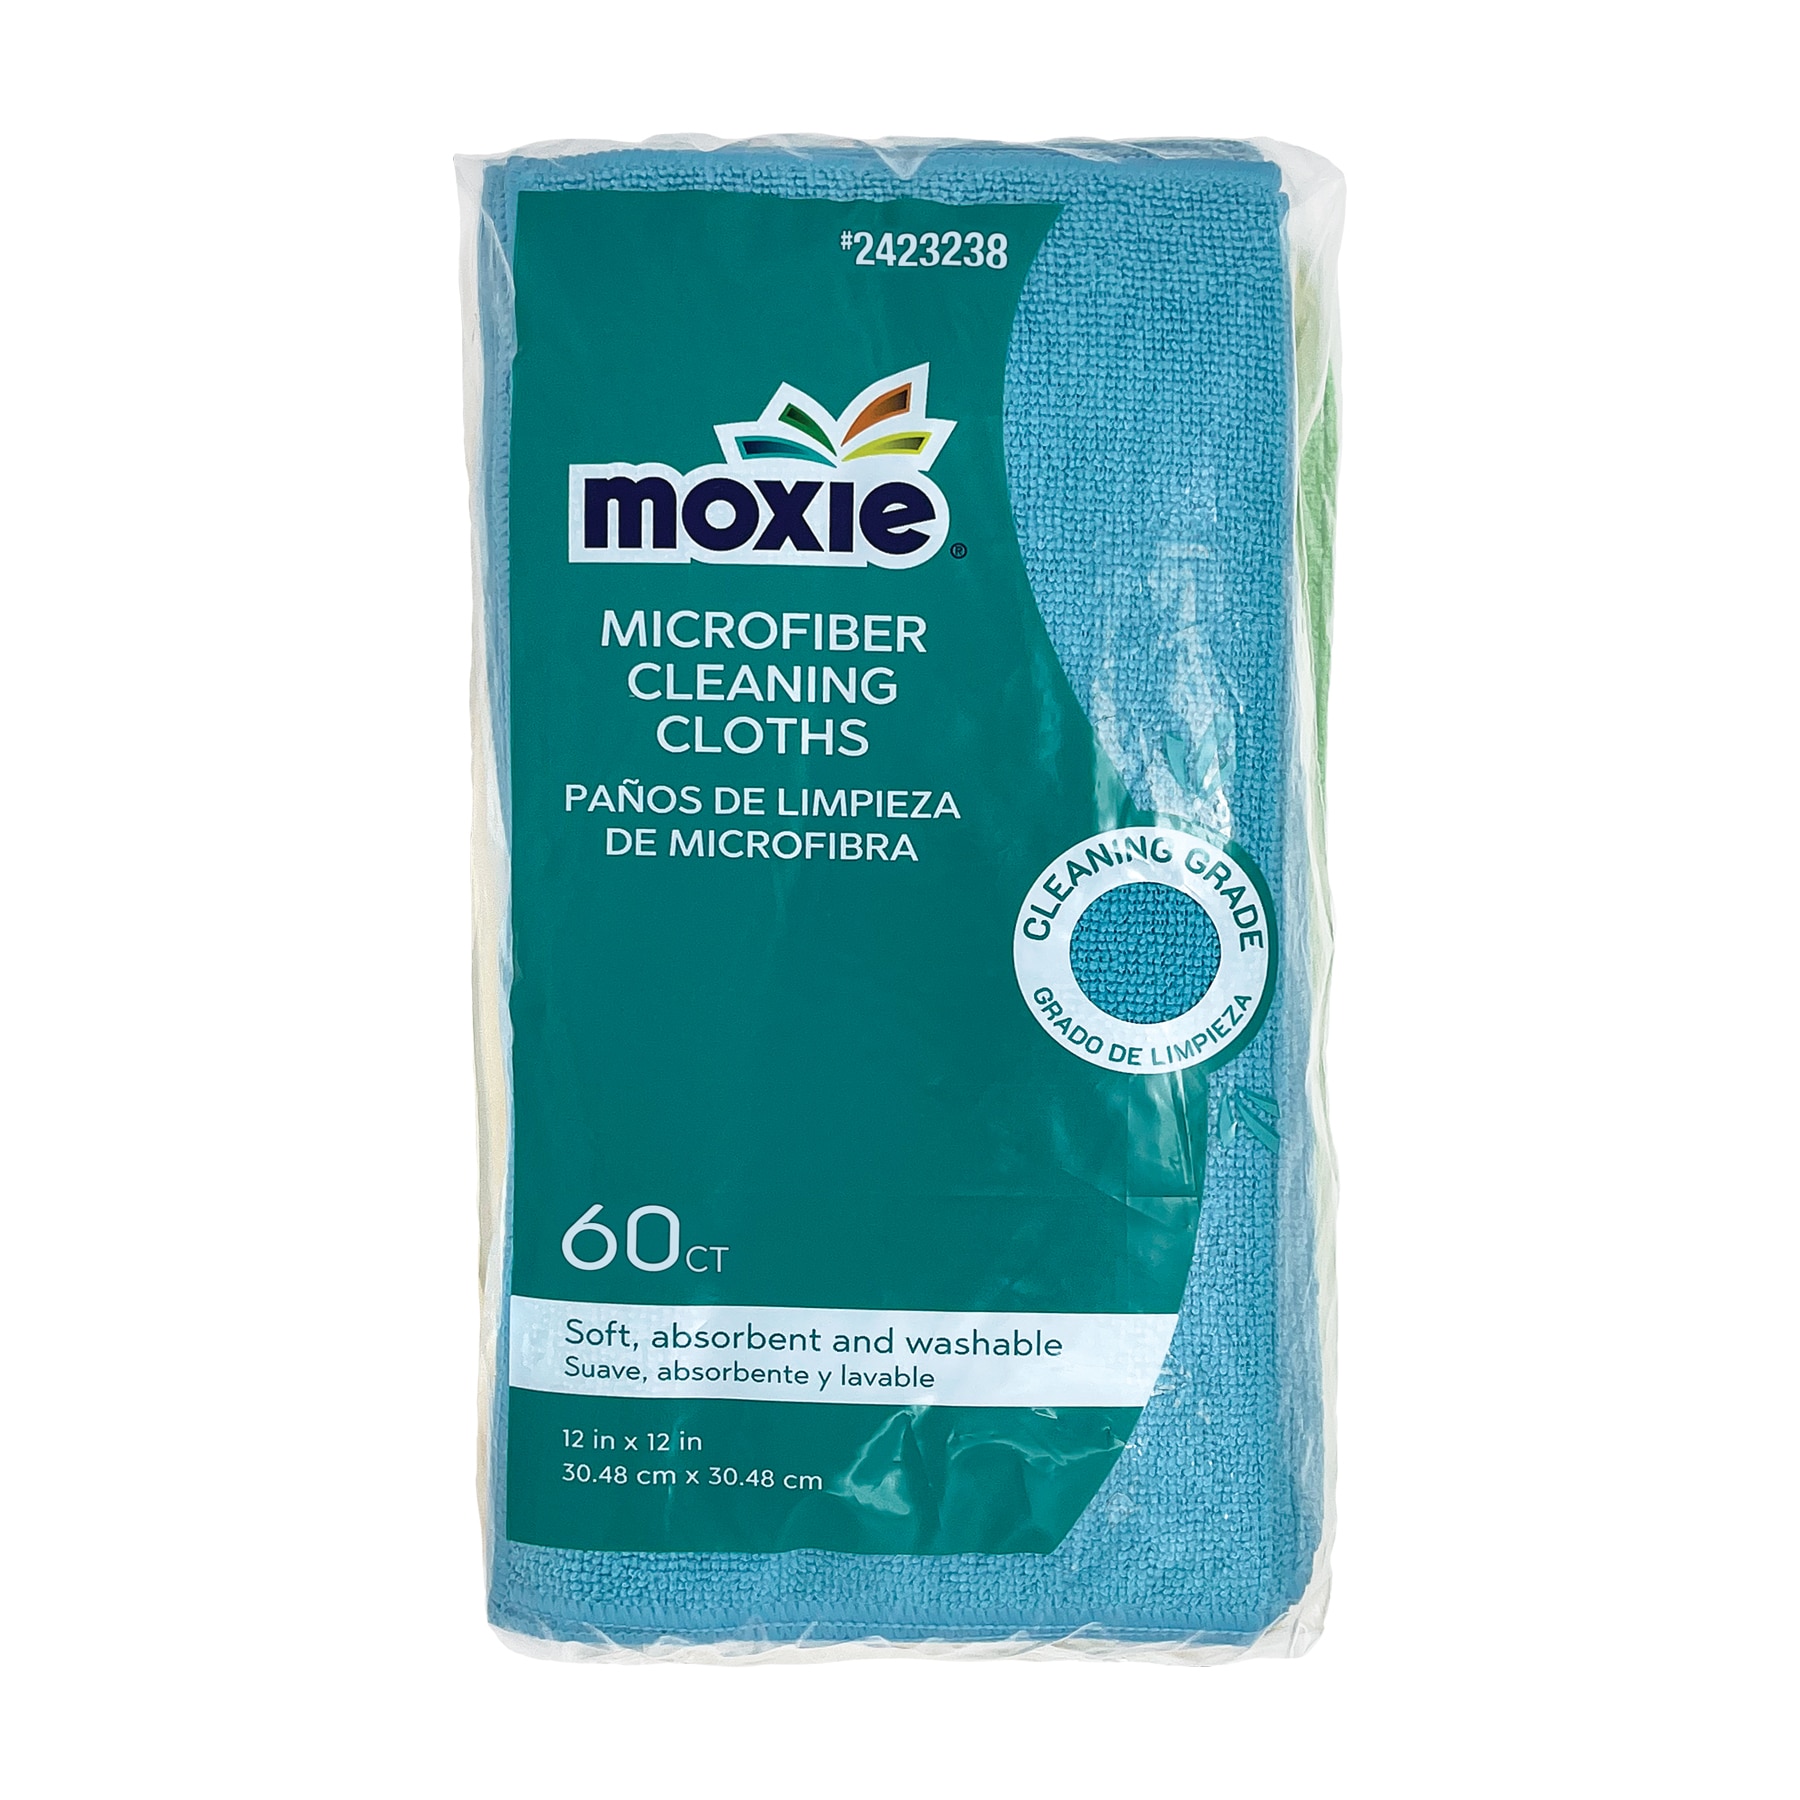 Norwex Mattress Cleaner, without spray nozzle, 12 fl oz